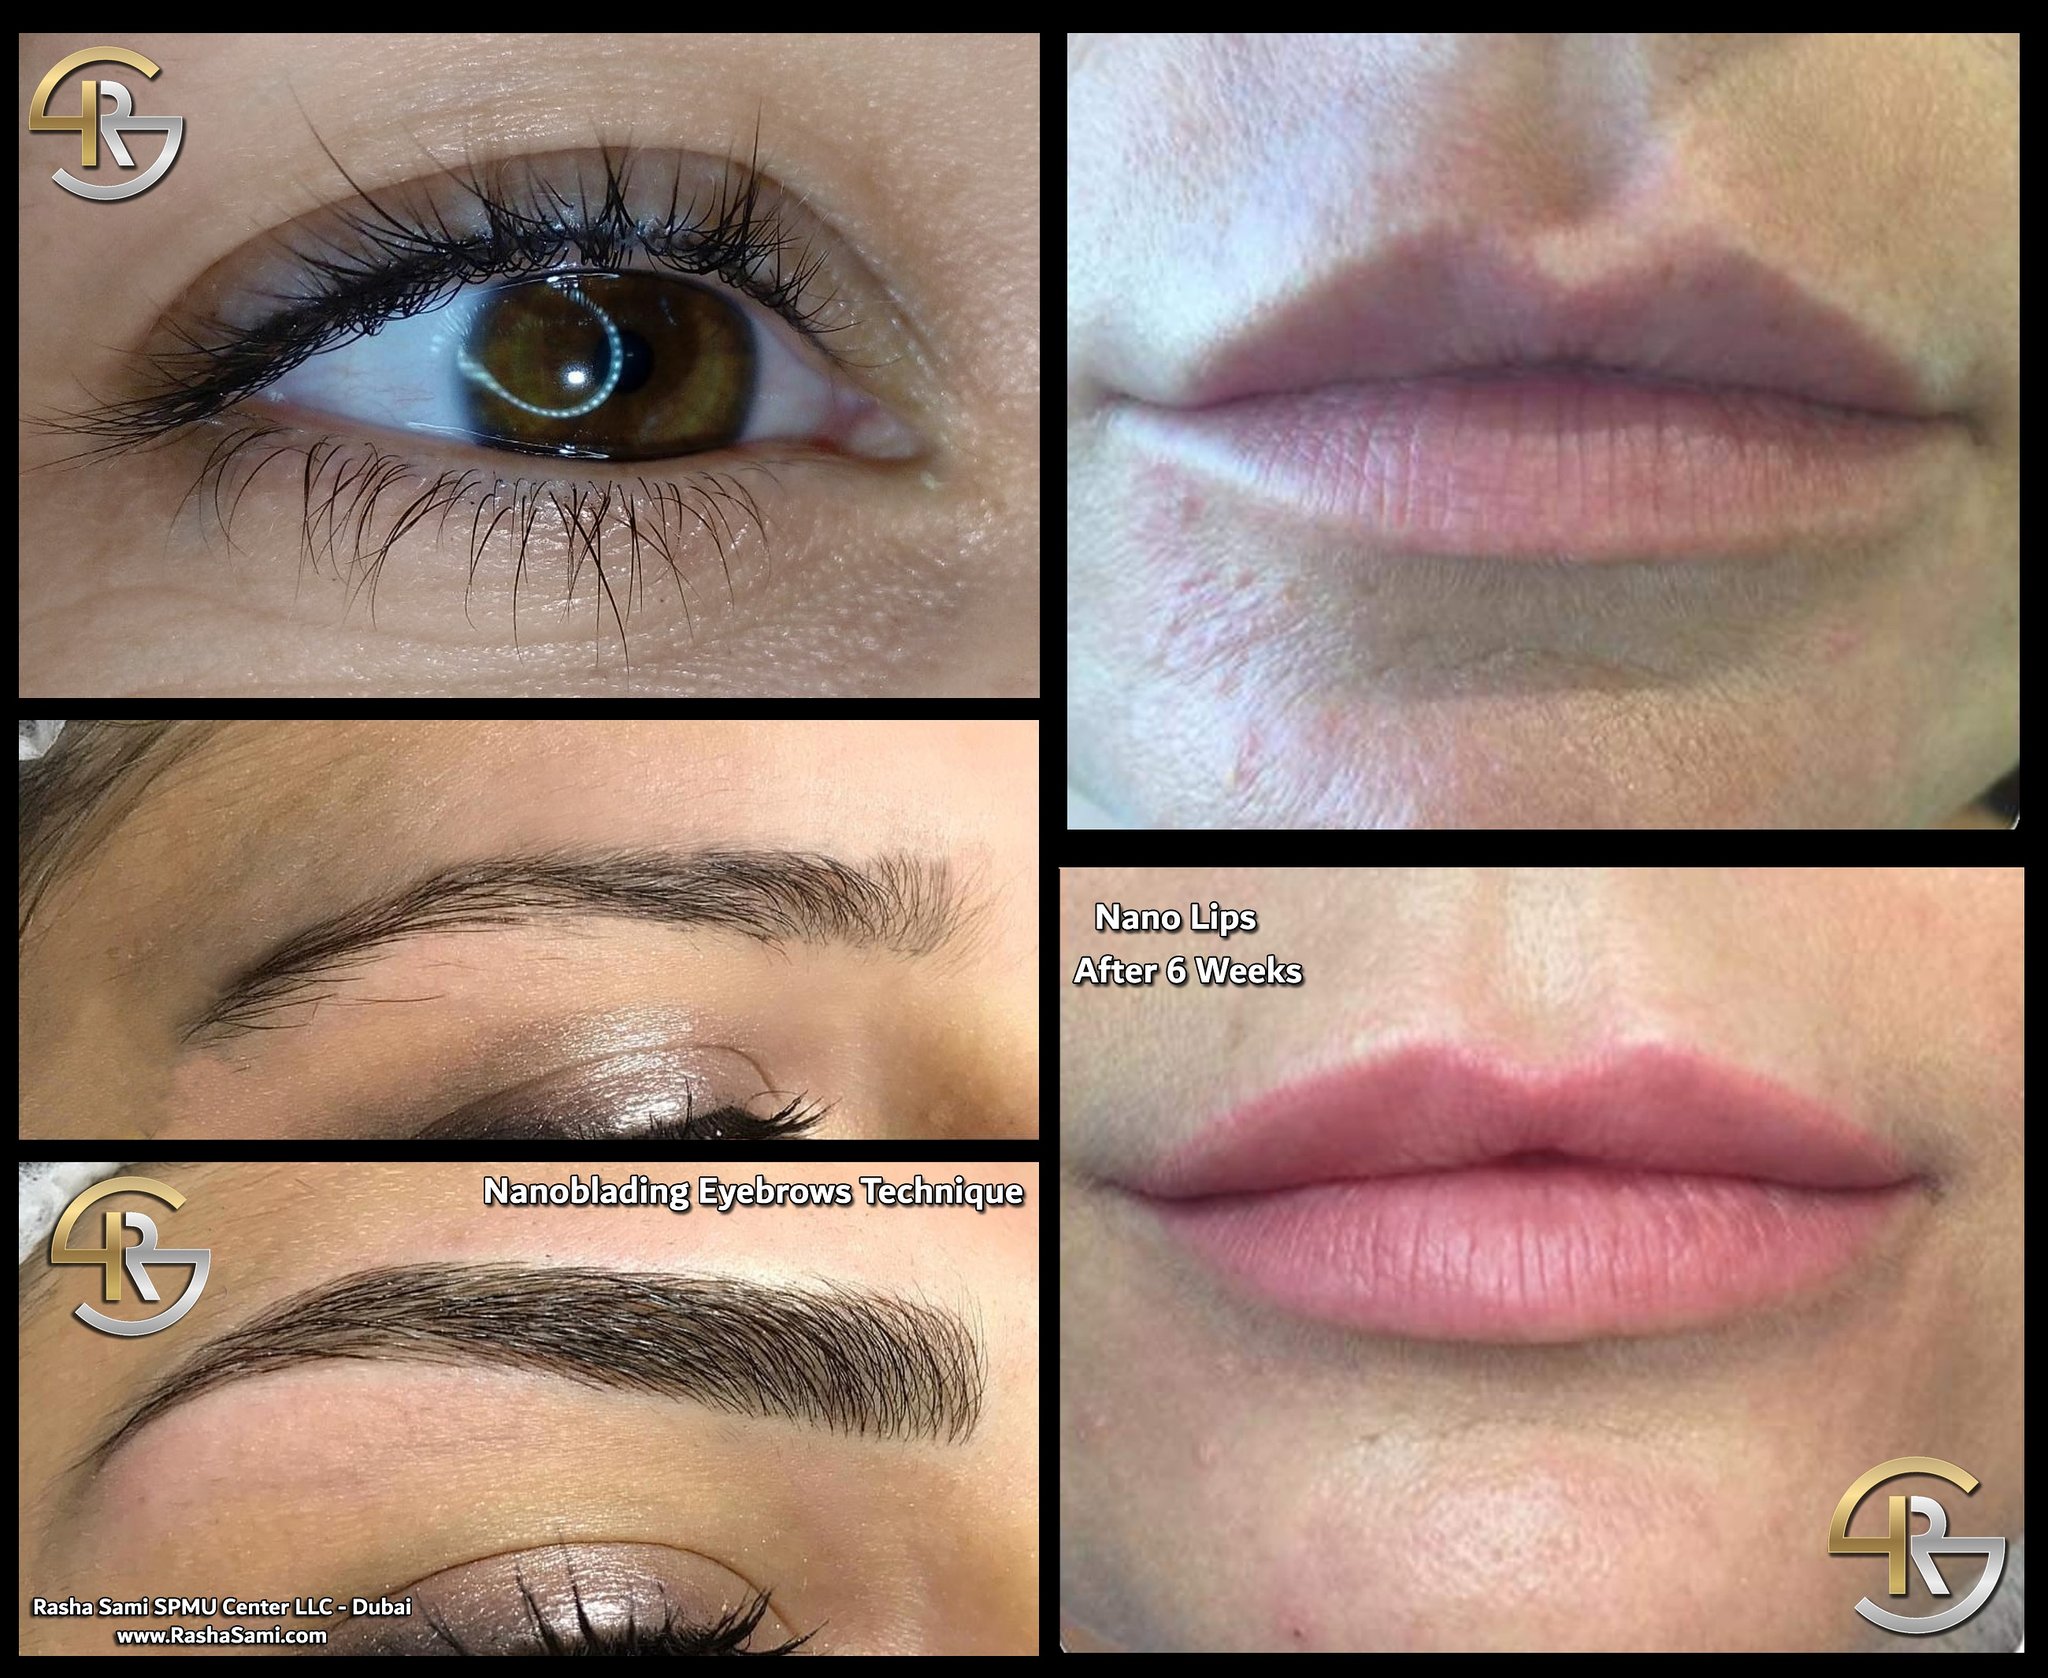 Rasha Sami SPMU on Twitter: "Nanoblading technique The newest technique in semi permanent makeup now in Dubai exclusively in Rasha Sami SPMU Center LLC #Nanoblading #Eyebrows #eyeliner #lips #RashaSamiSPMU #scalpe #pigmentation #